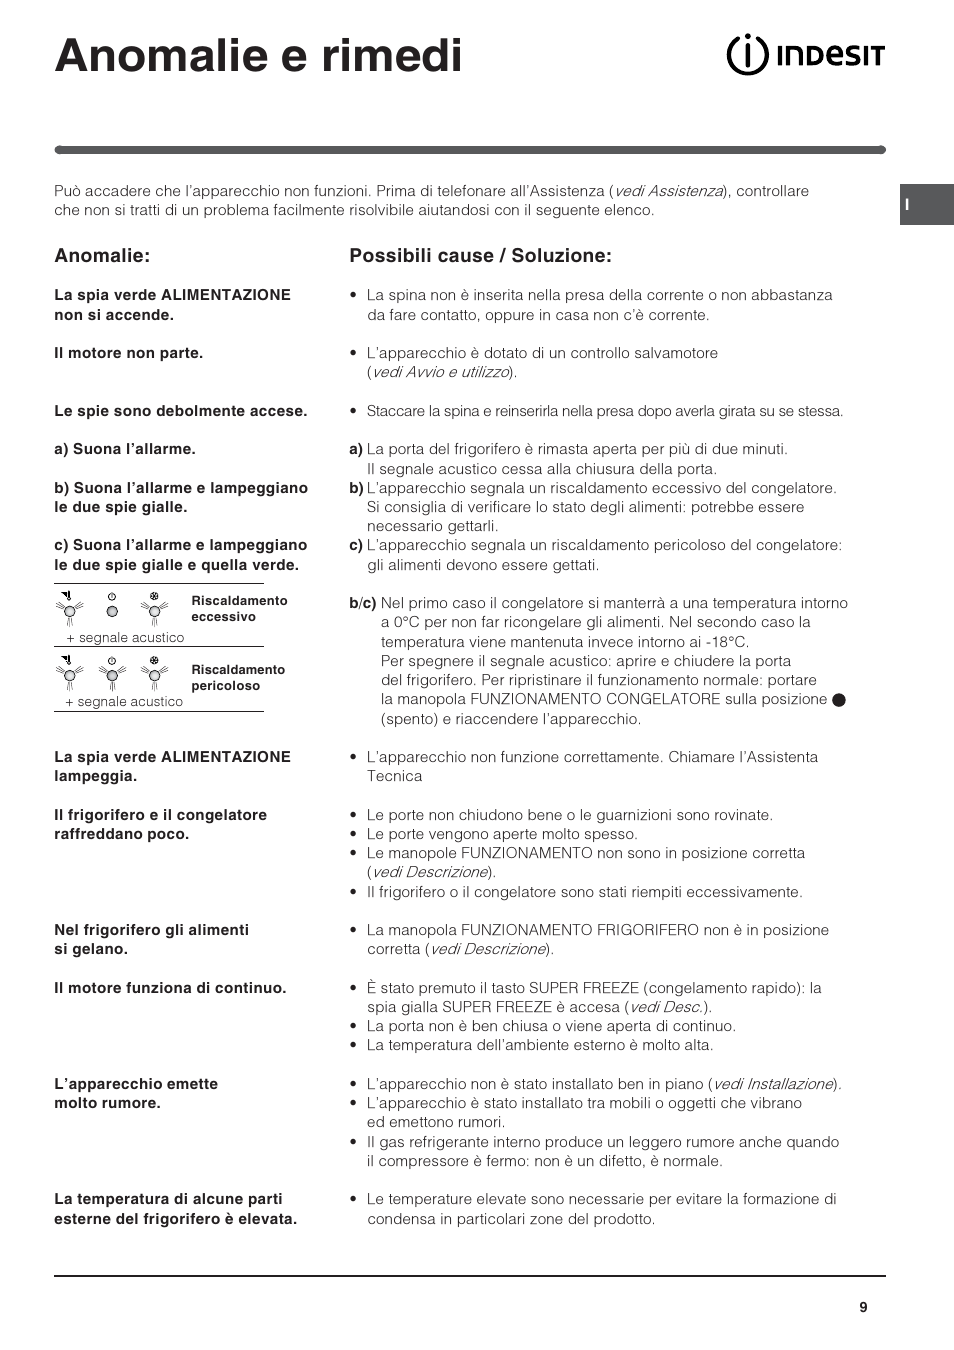 Anomalie e rimedi, Anomalie, Possibili cause / soluzione | Indesit PBAA 34  NF User Manual | Page 9 / 72